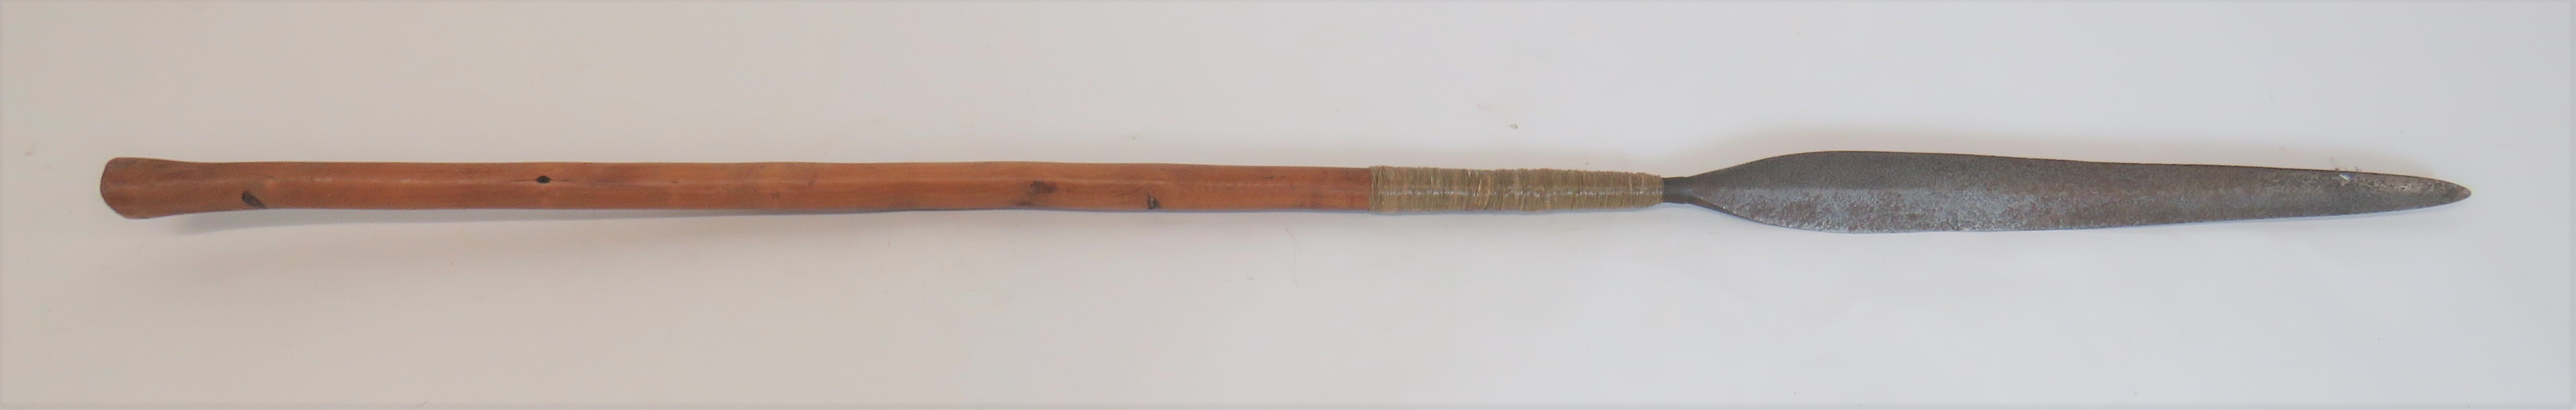 19th Century African Zulu Short Stabbing Spear 14 inch, double edged, leaf shape blade.  Cord